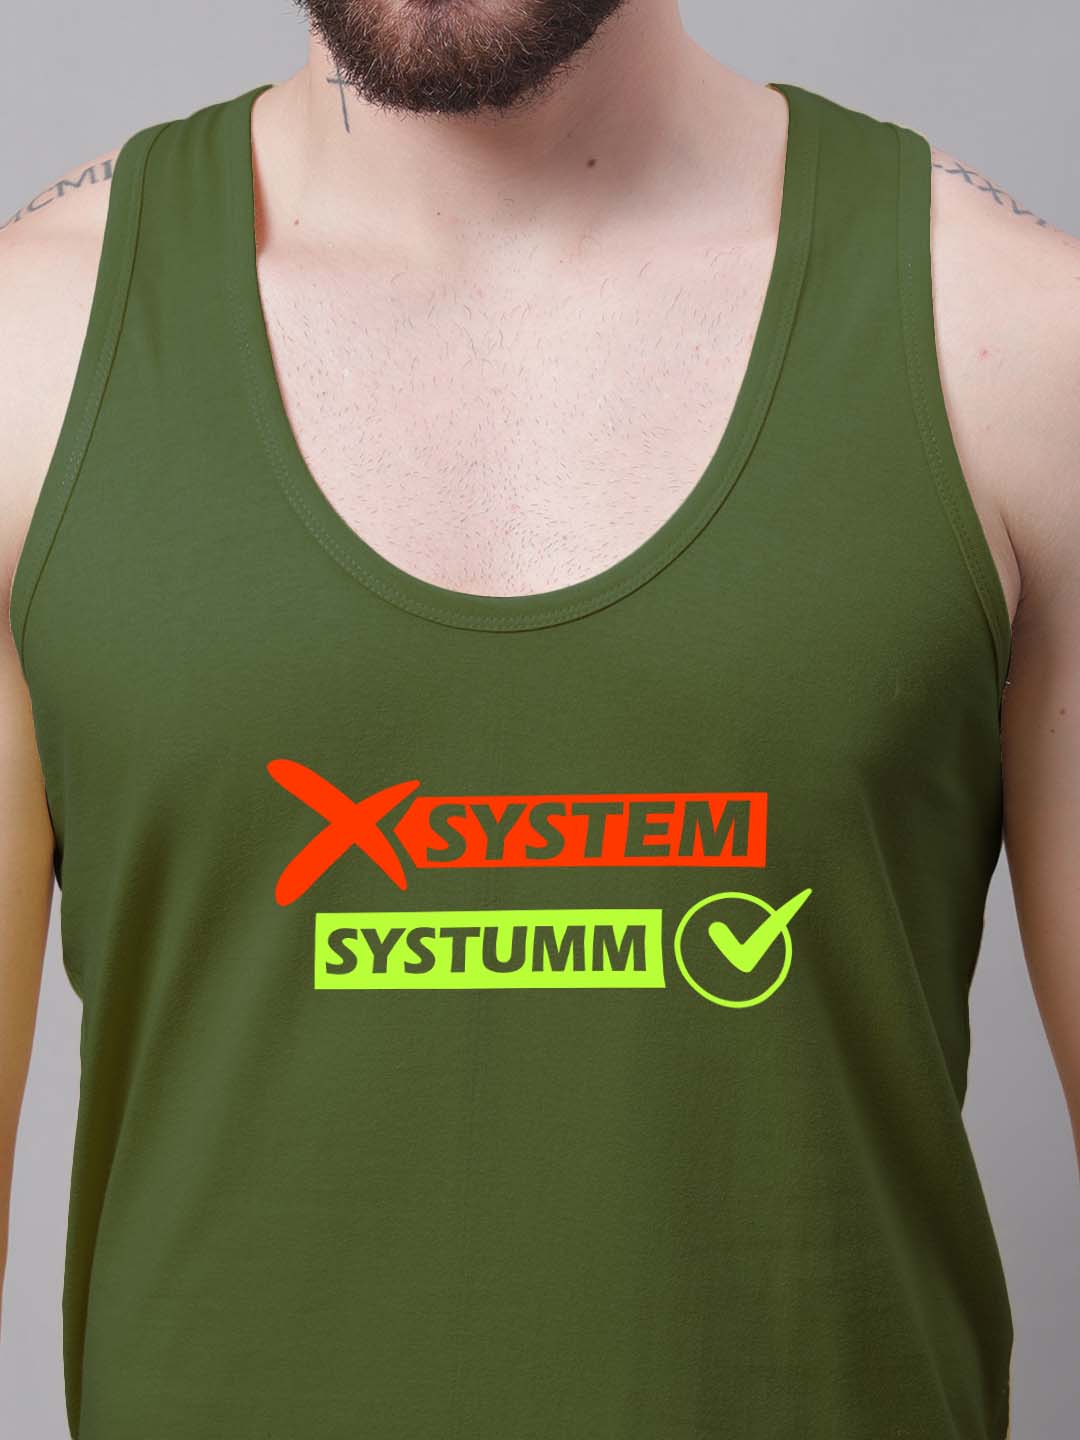 Men's Systumm Printed Innerwear Gym Vest - Friskers